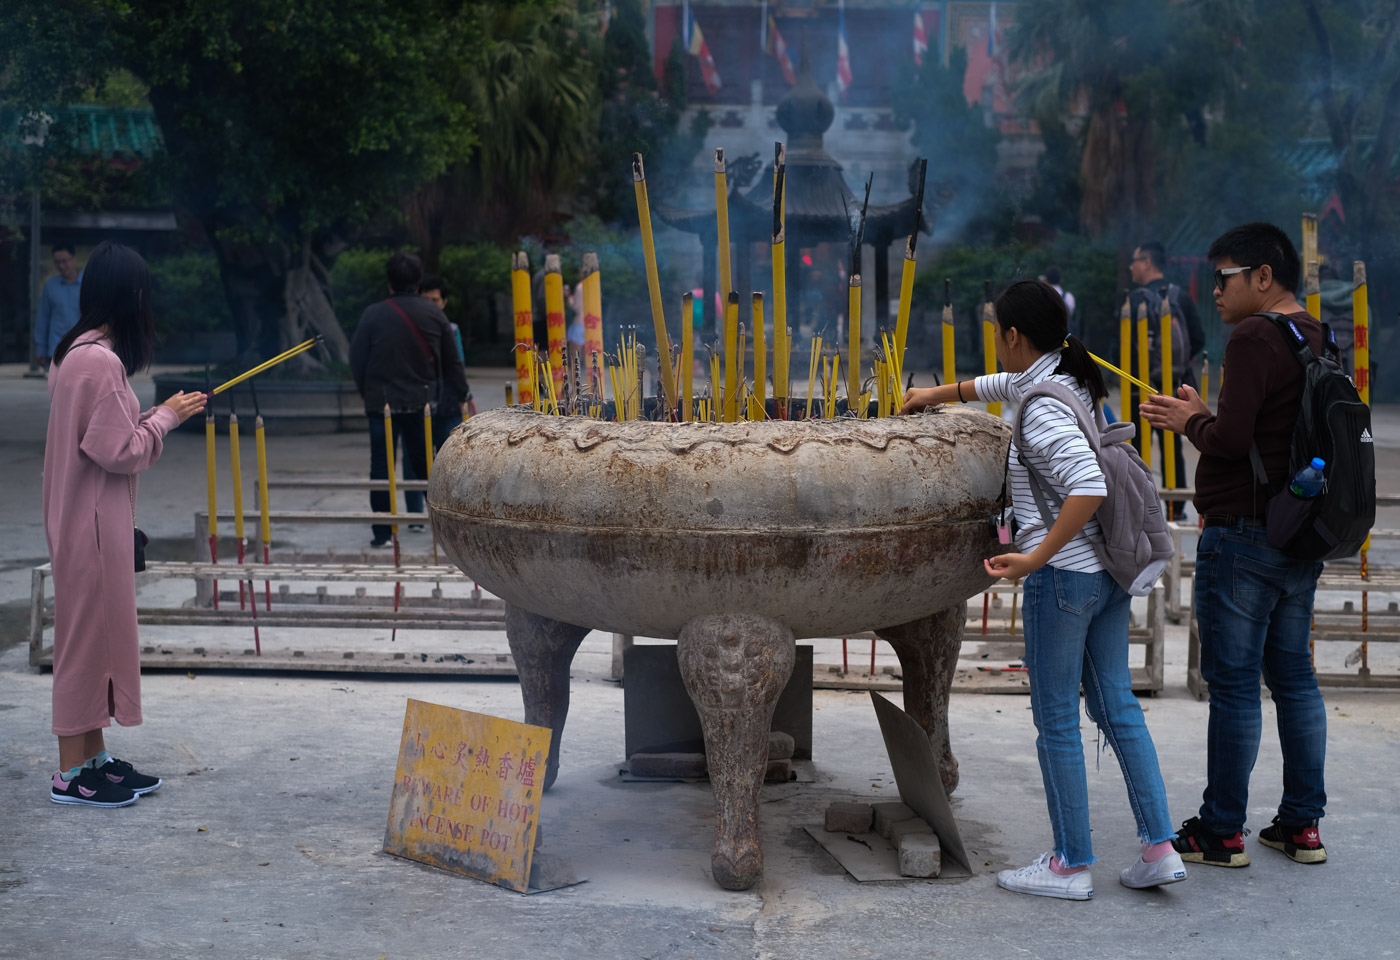 Burning incense at Po Li monastery